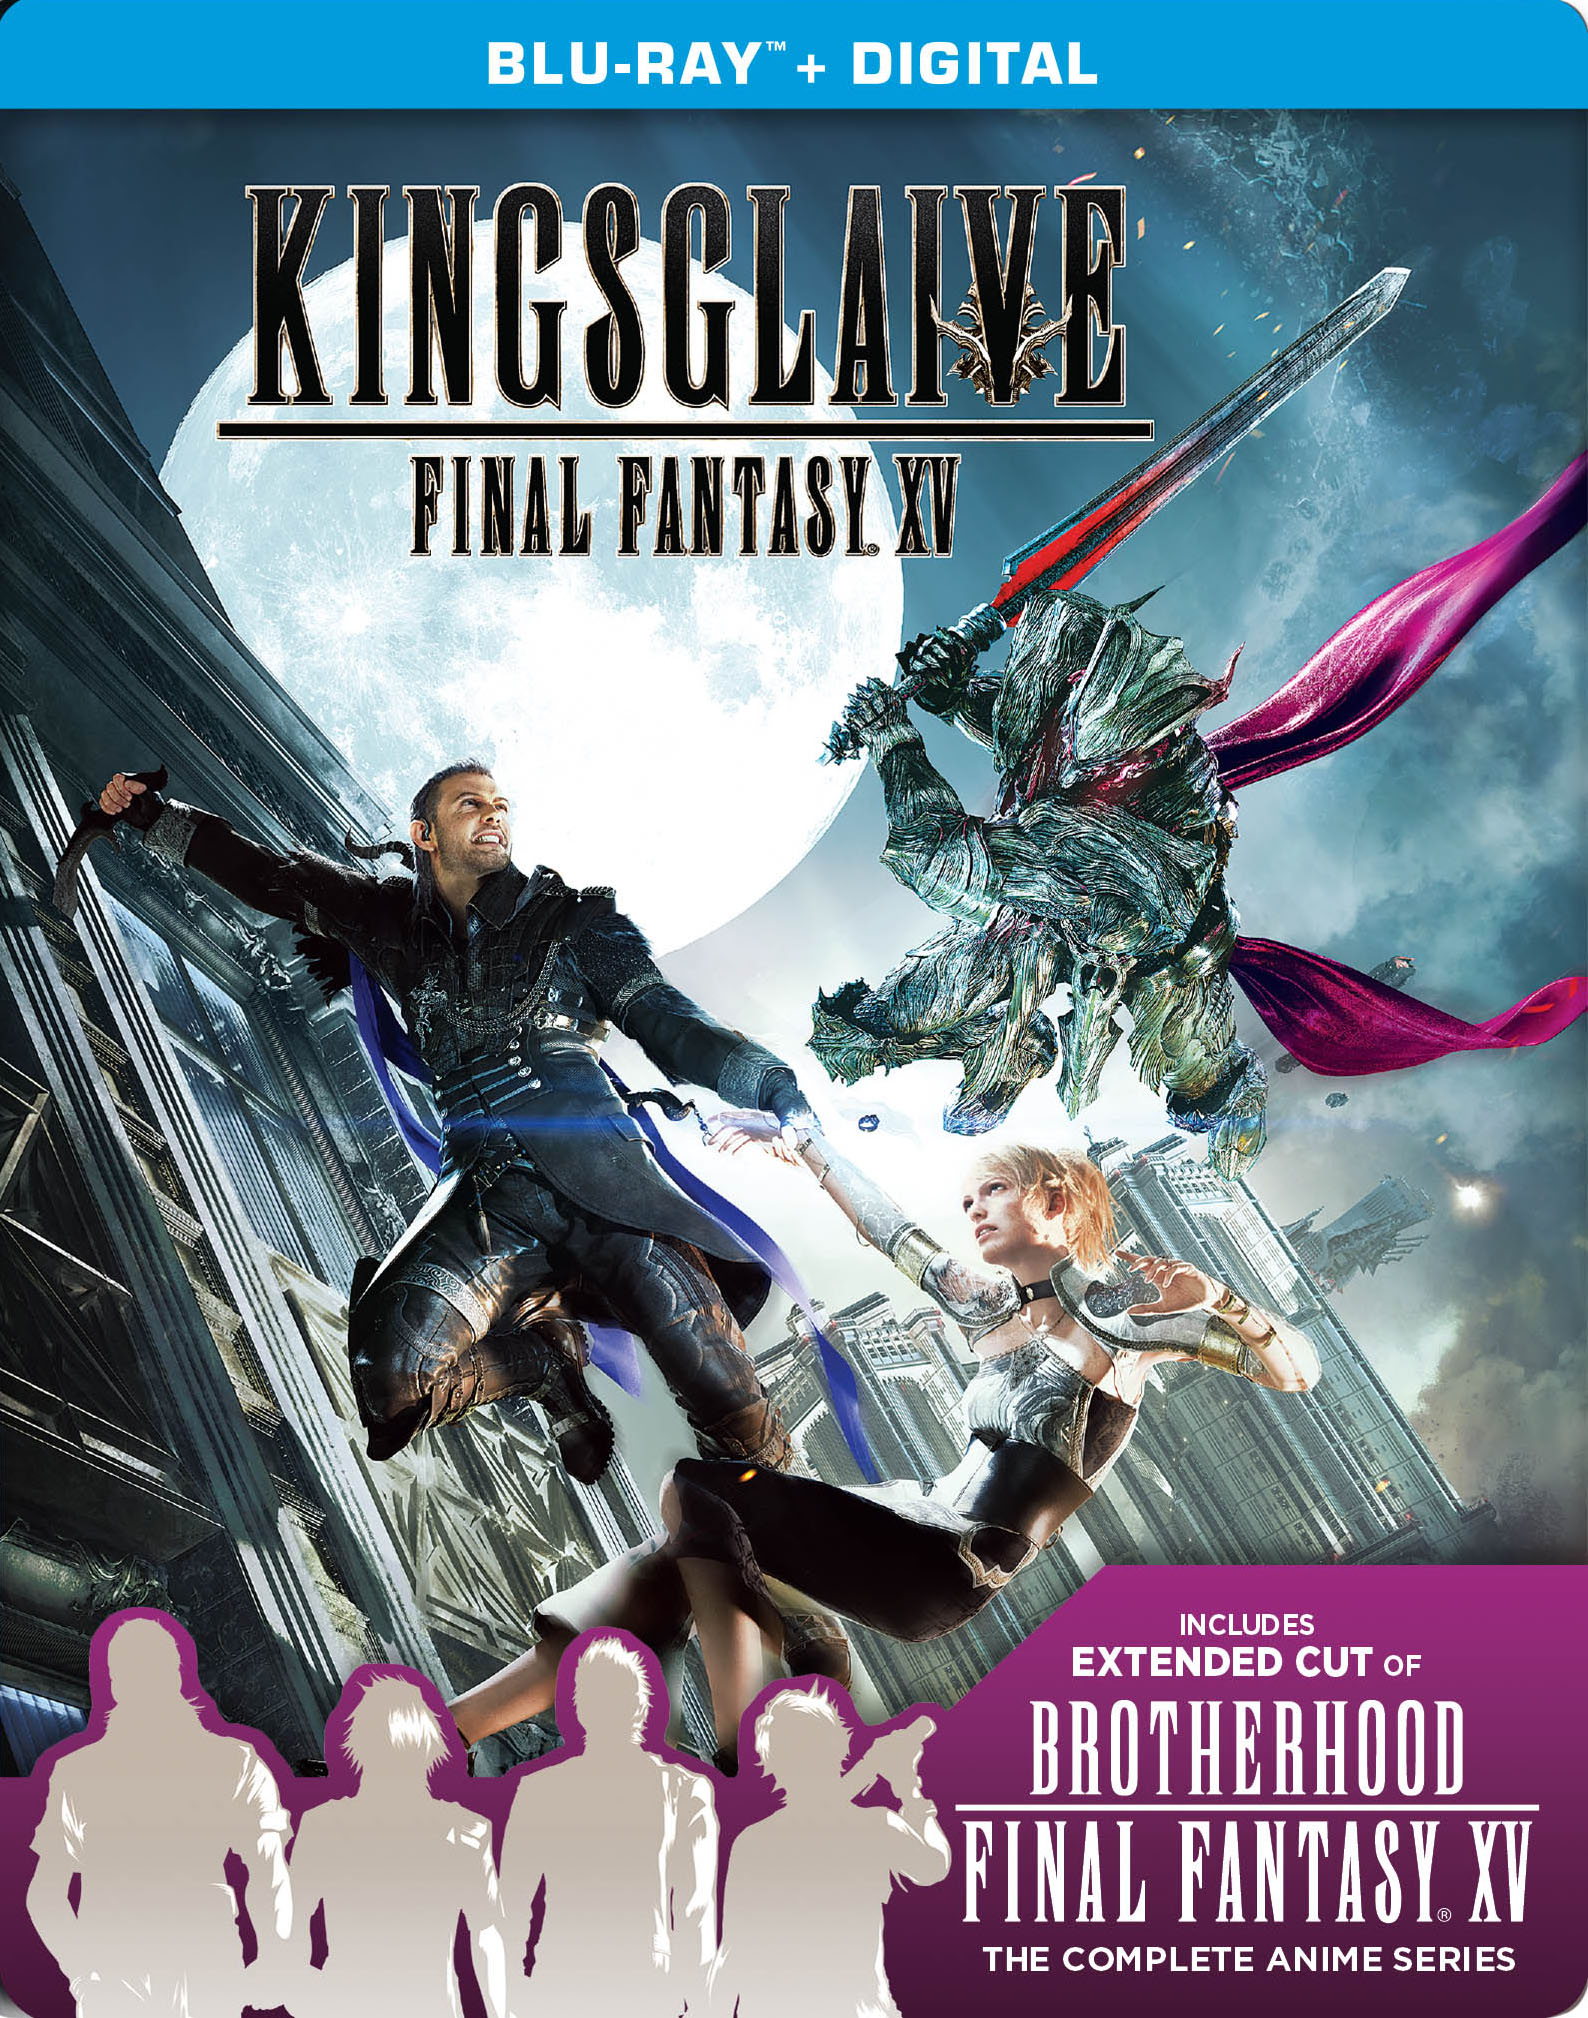 Brotherhood Final Fantasy XV Anime Continues Today